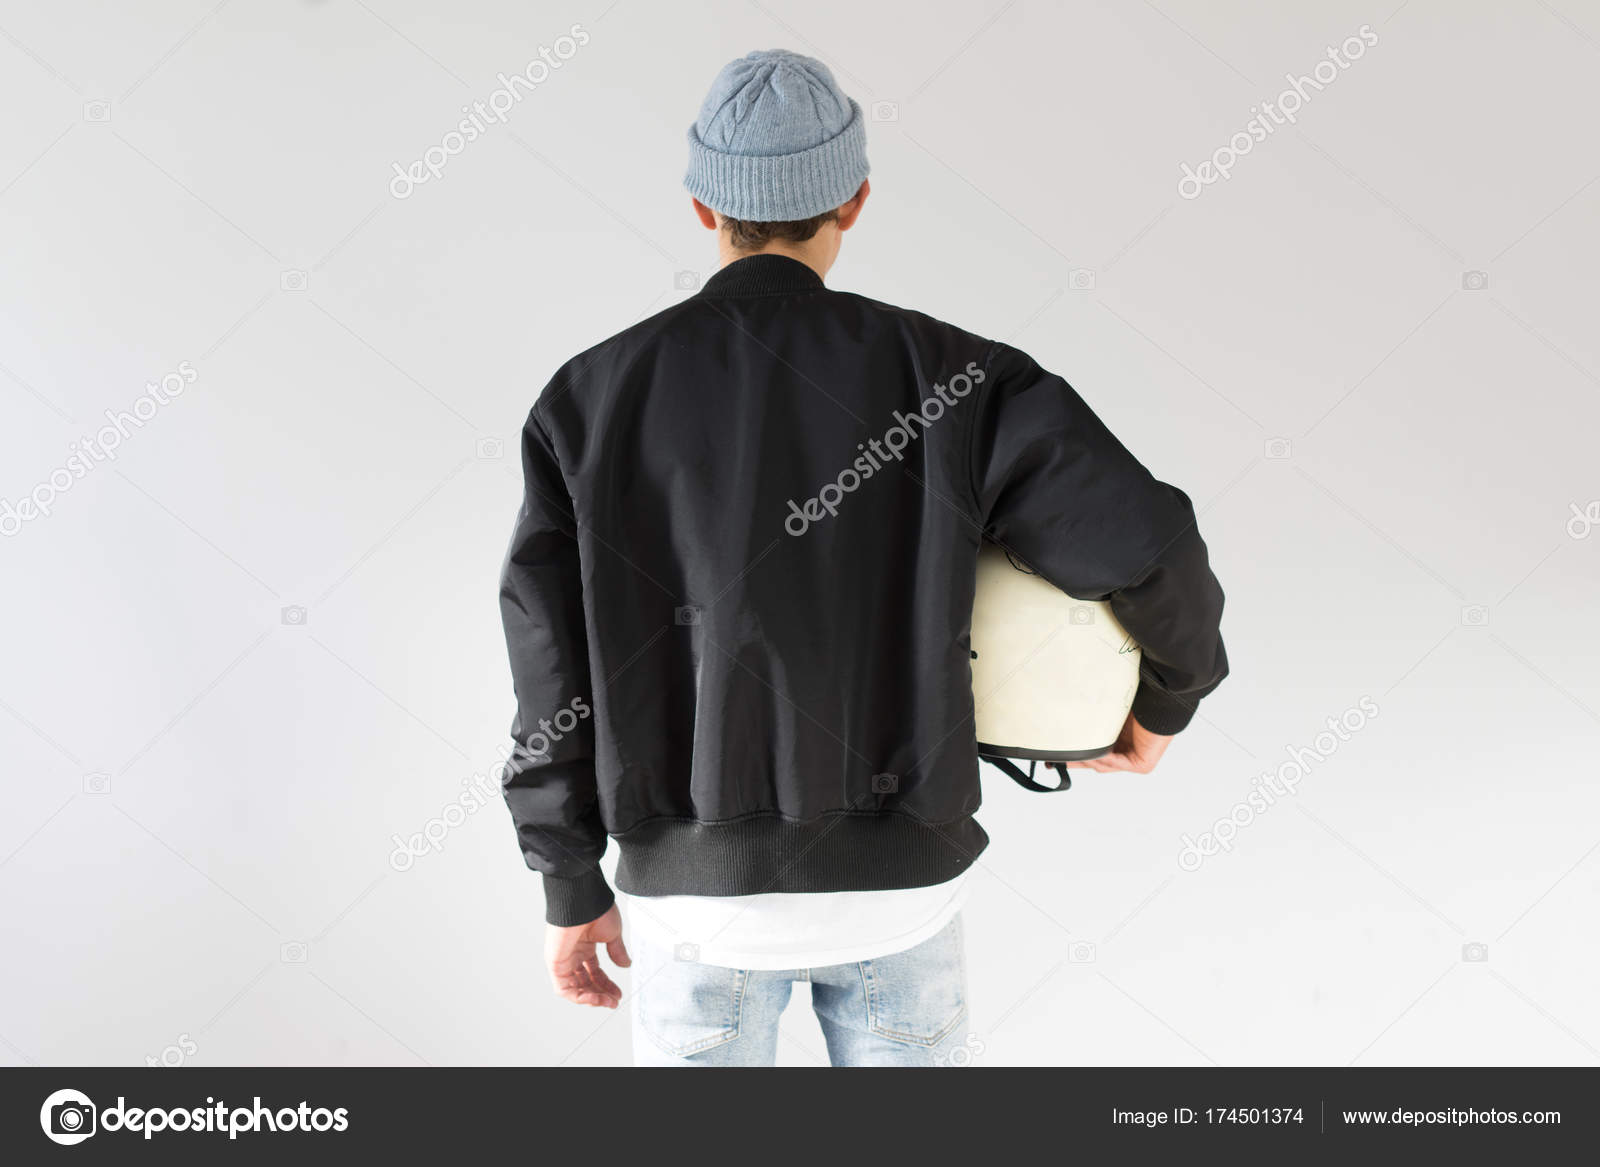 Download Hipster In Black Bomber Mockup Jacket Royalty Free Photo Stock Image By C Steff Gutovska 174501374